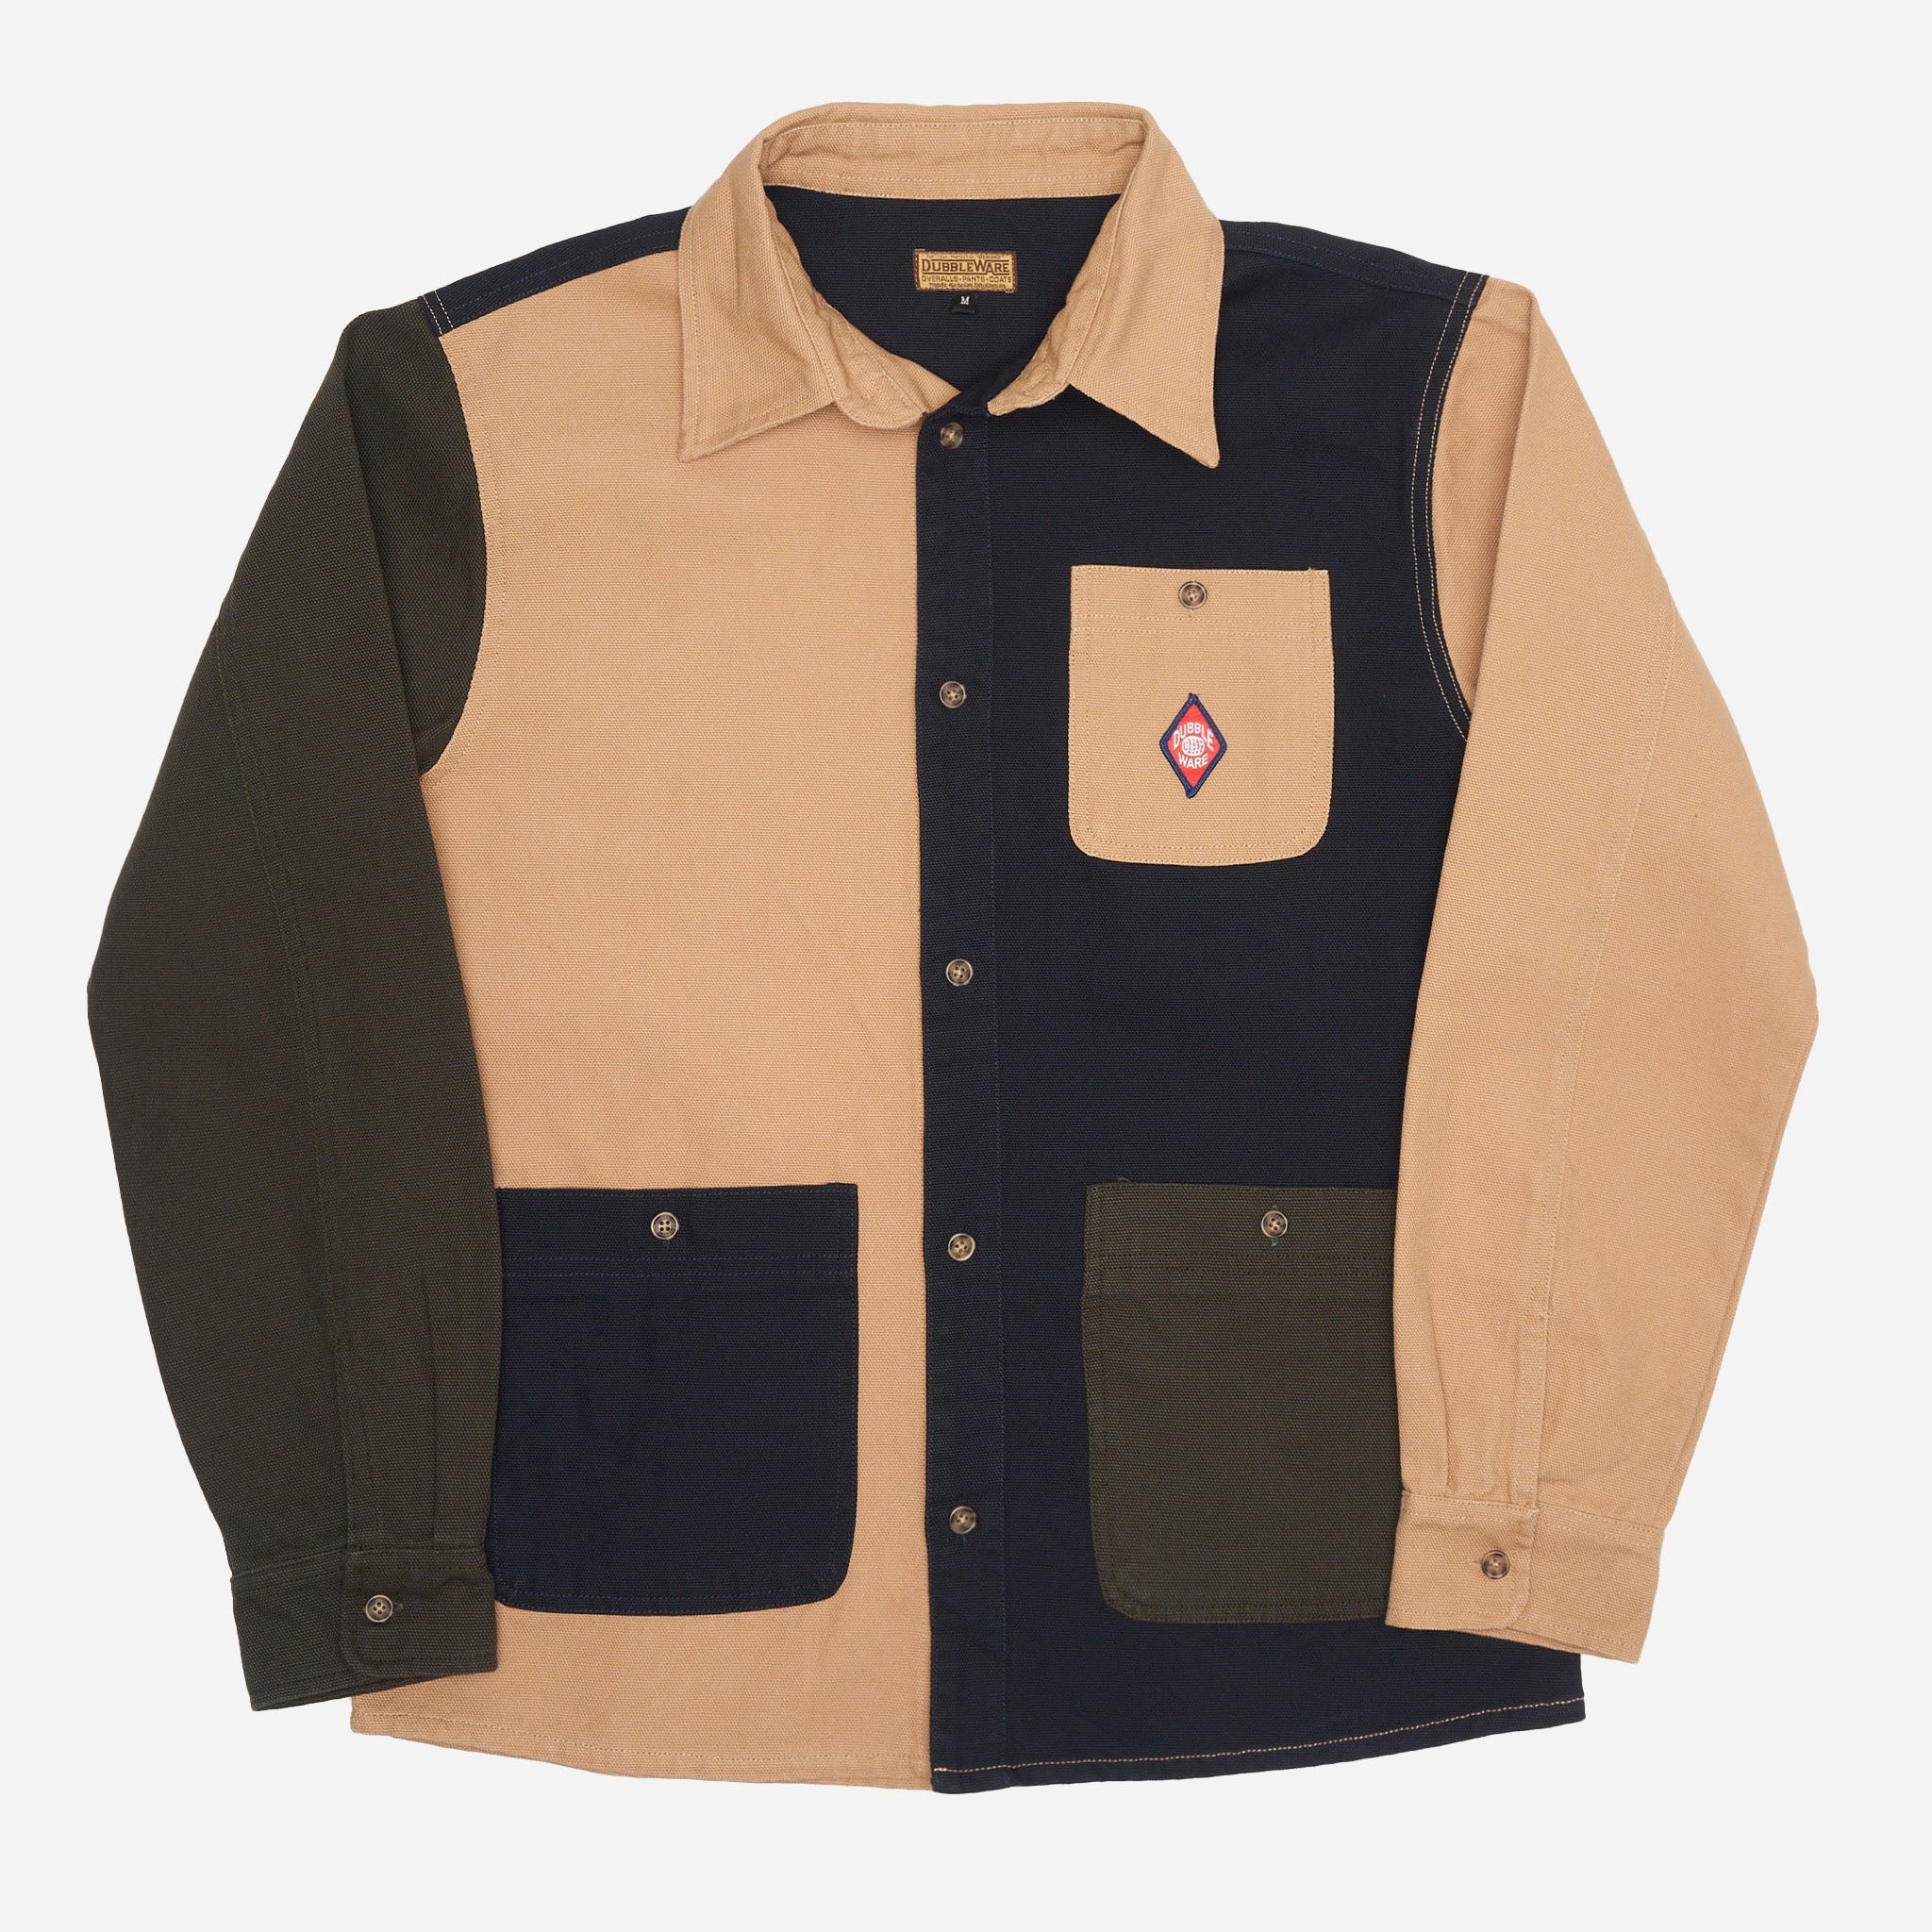 Contrast Work Shirt Jacket - Tan / Navy / Green